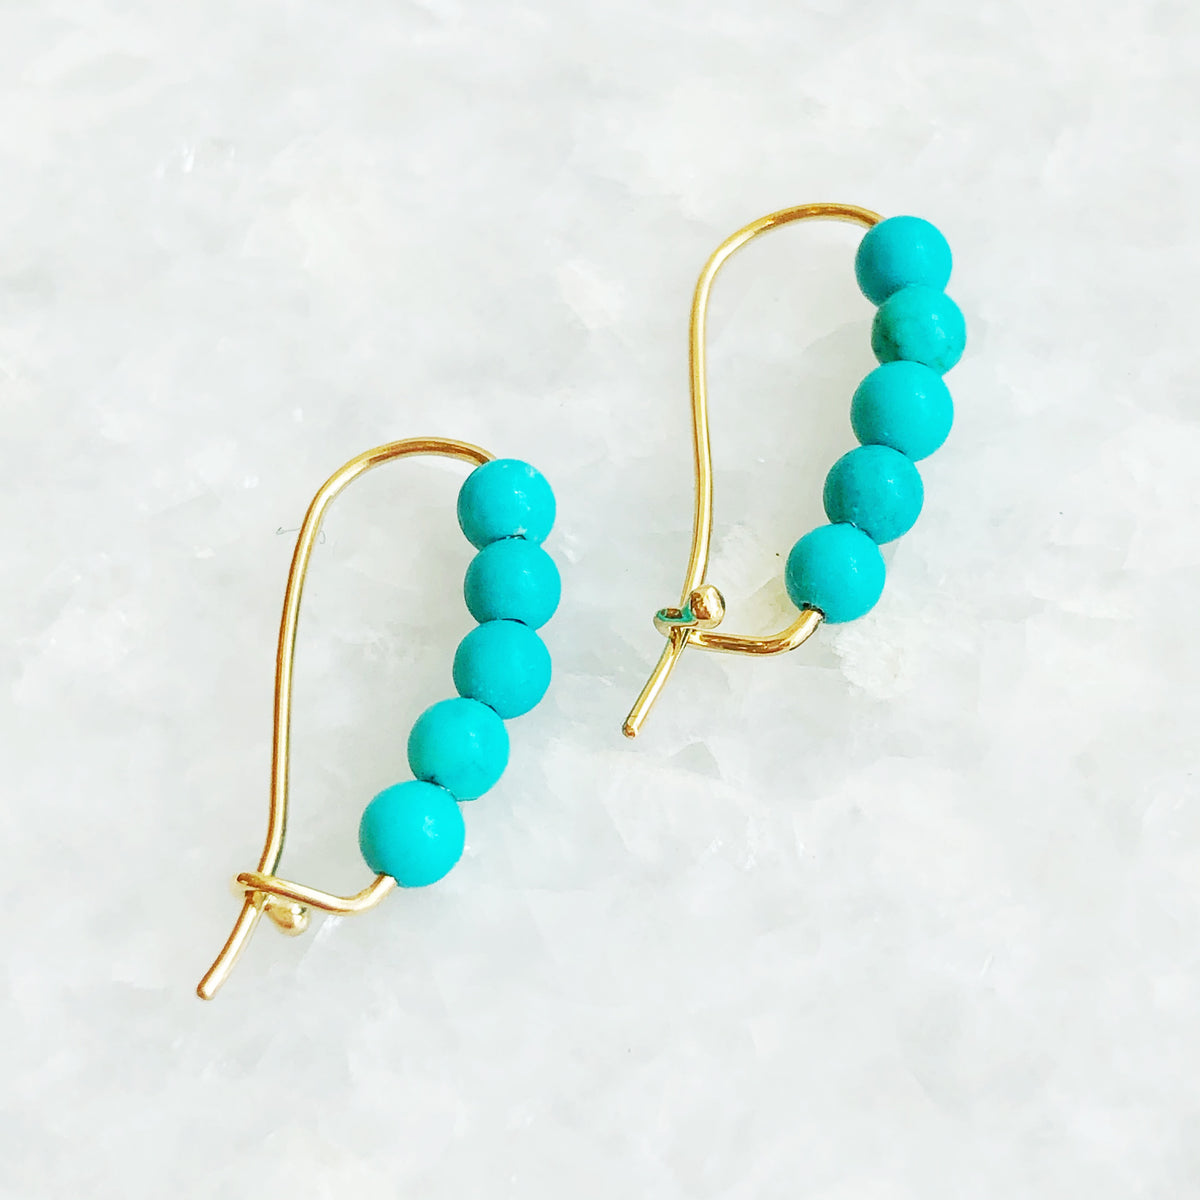 Stickpin Earrings in Turquoise